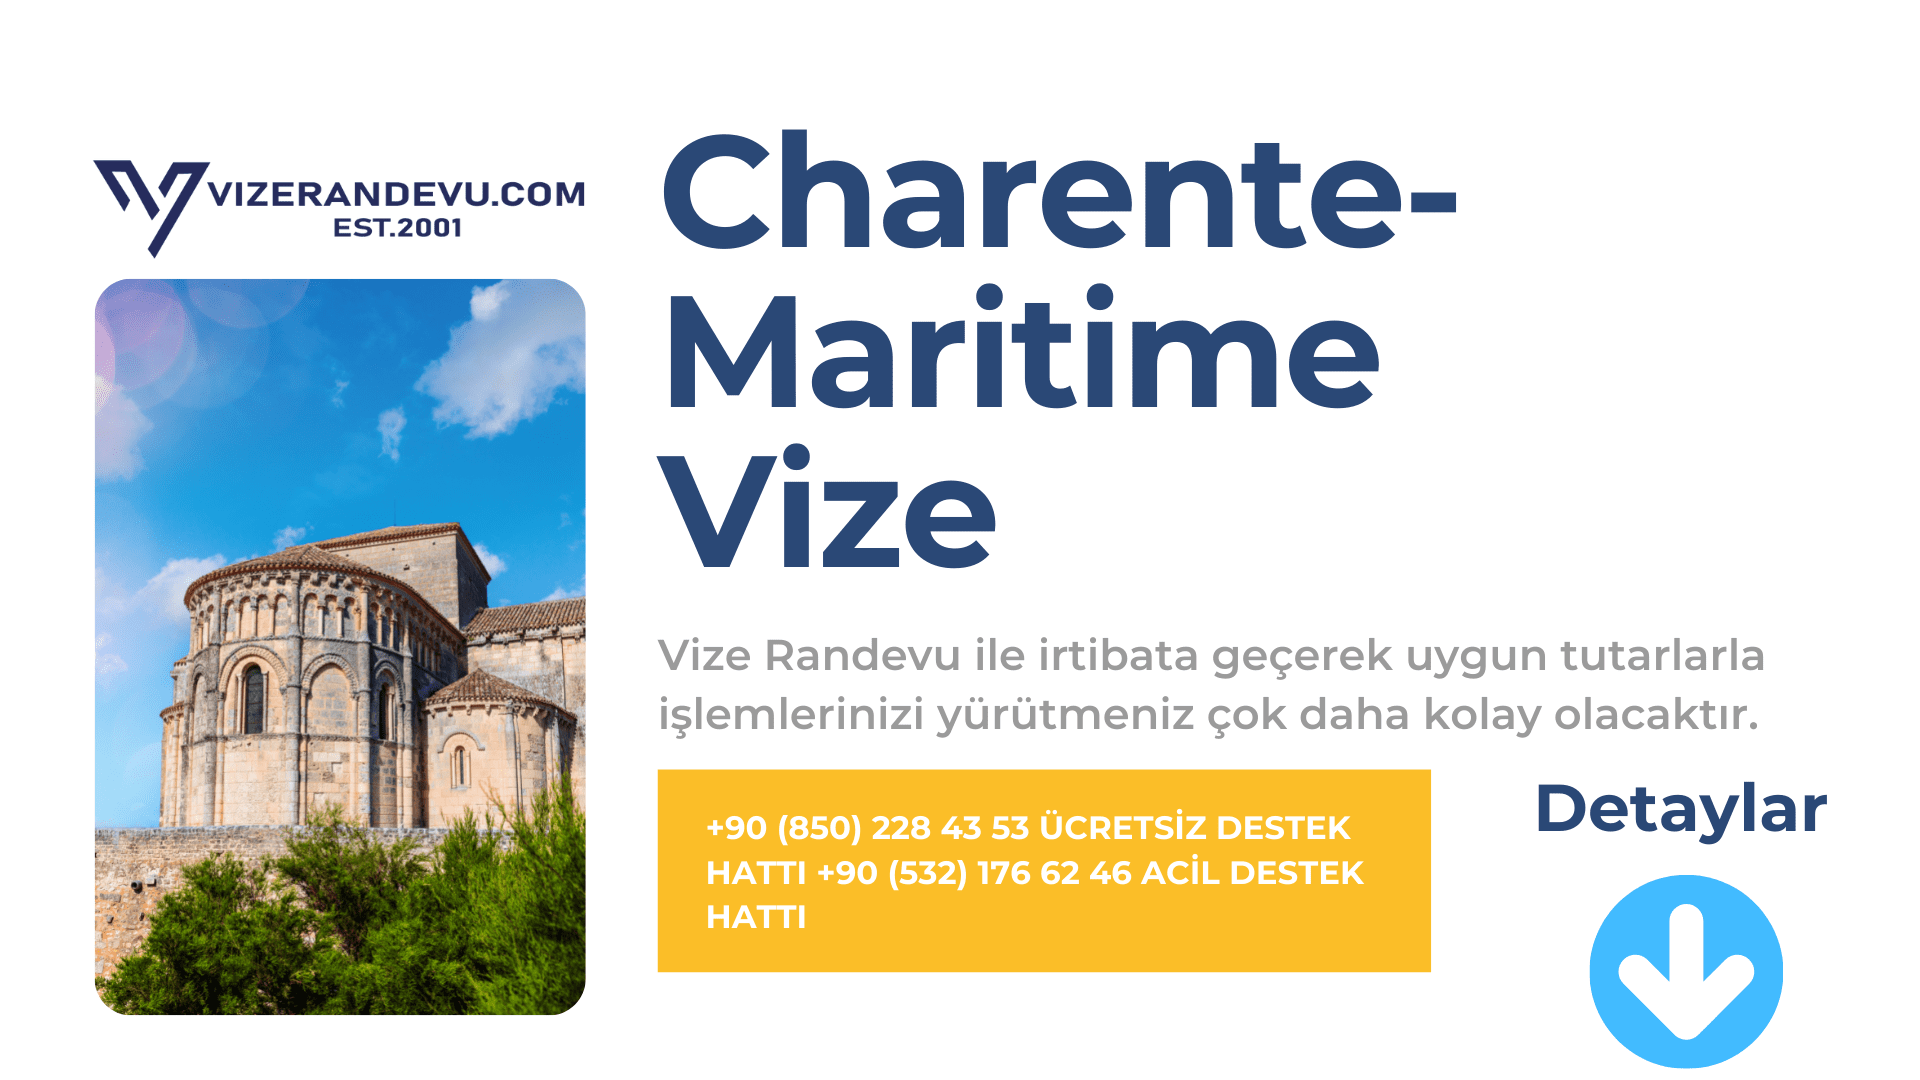 Fransa Charente-Maritime Vize Başvurusu